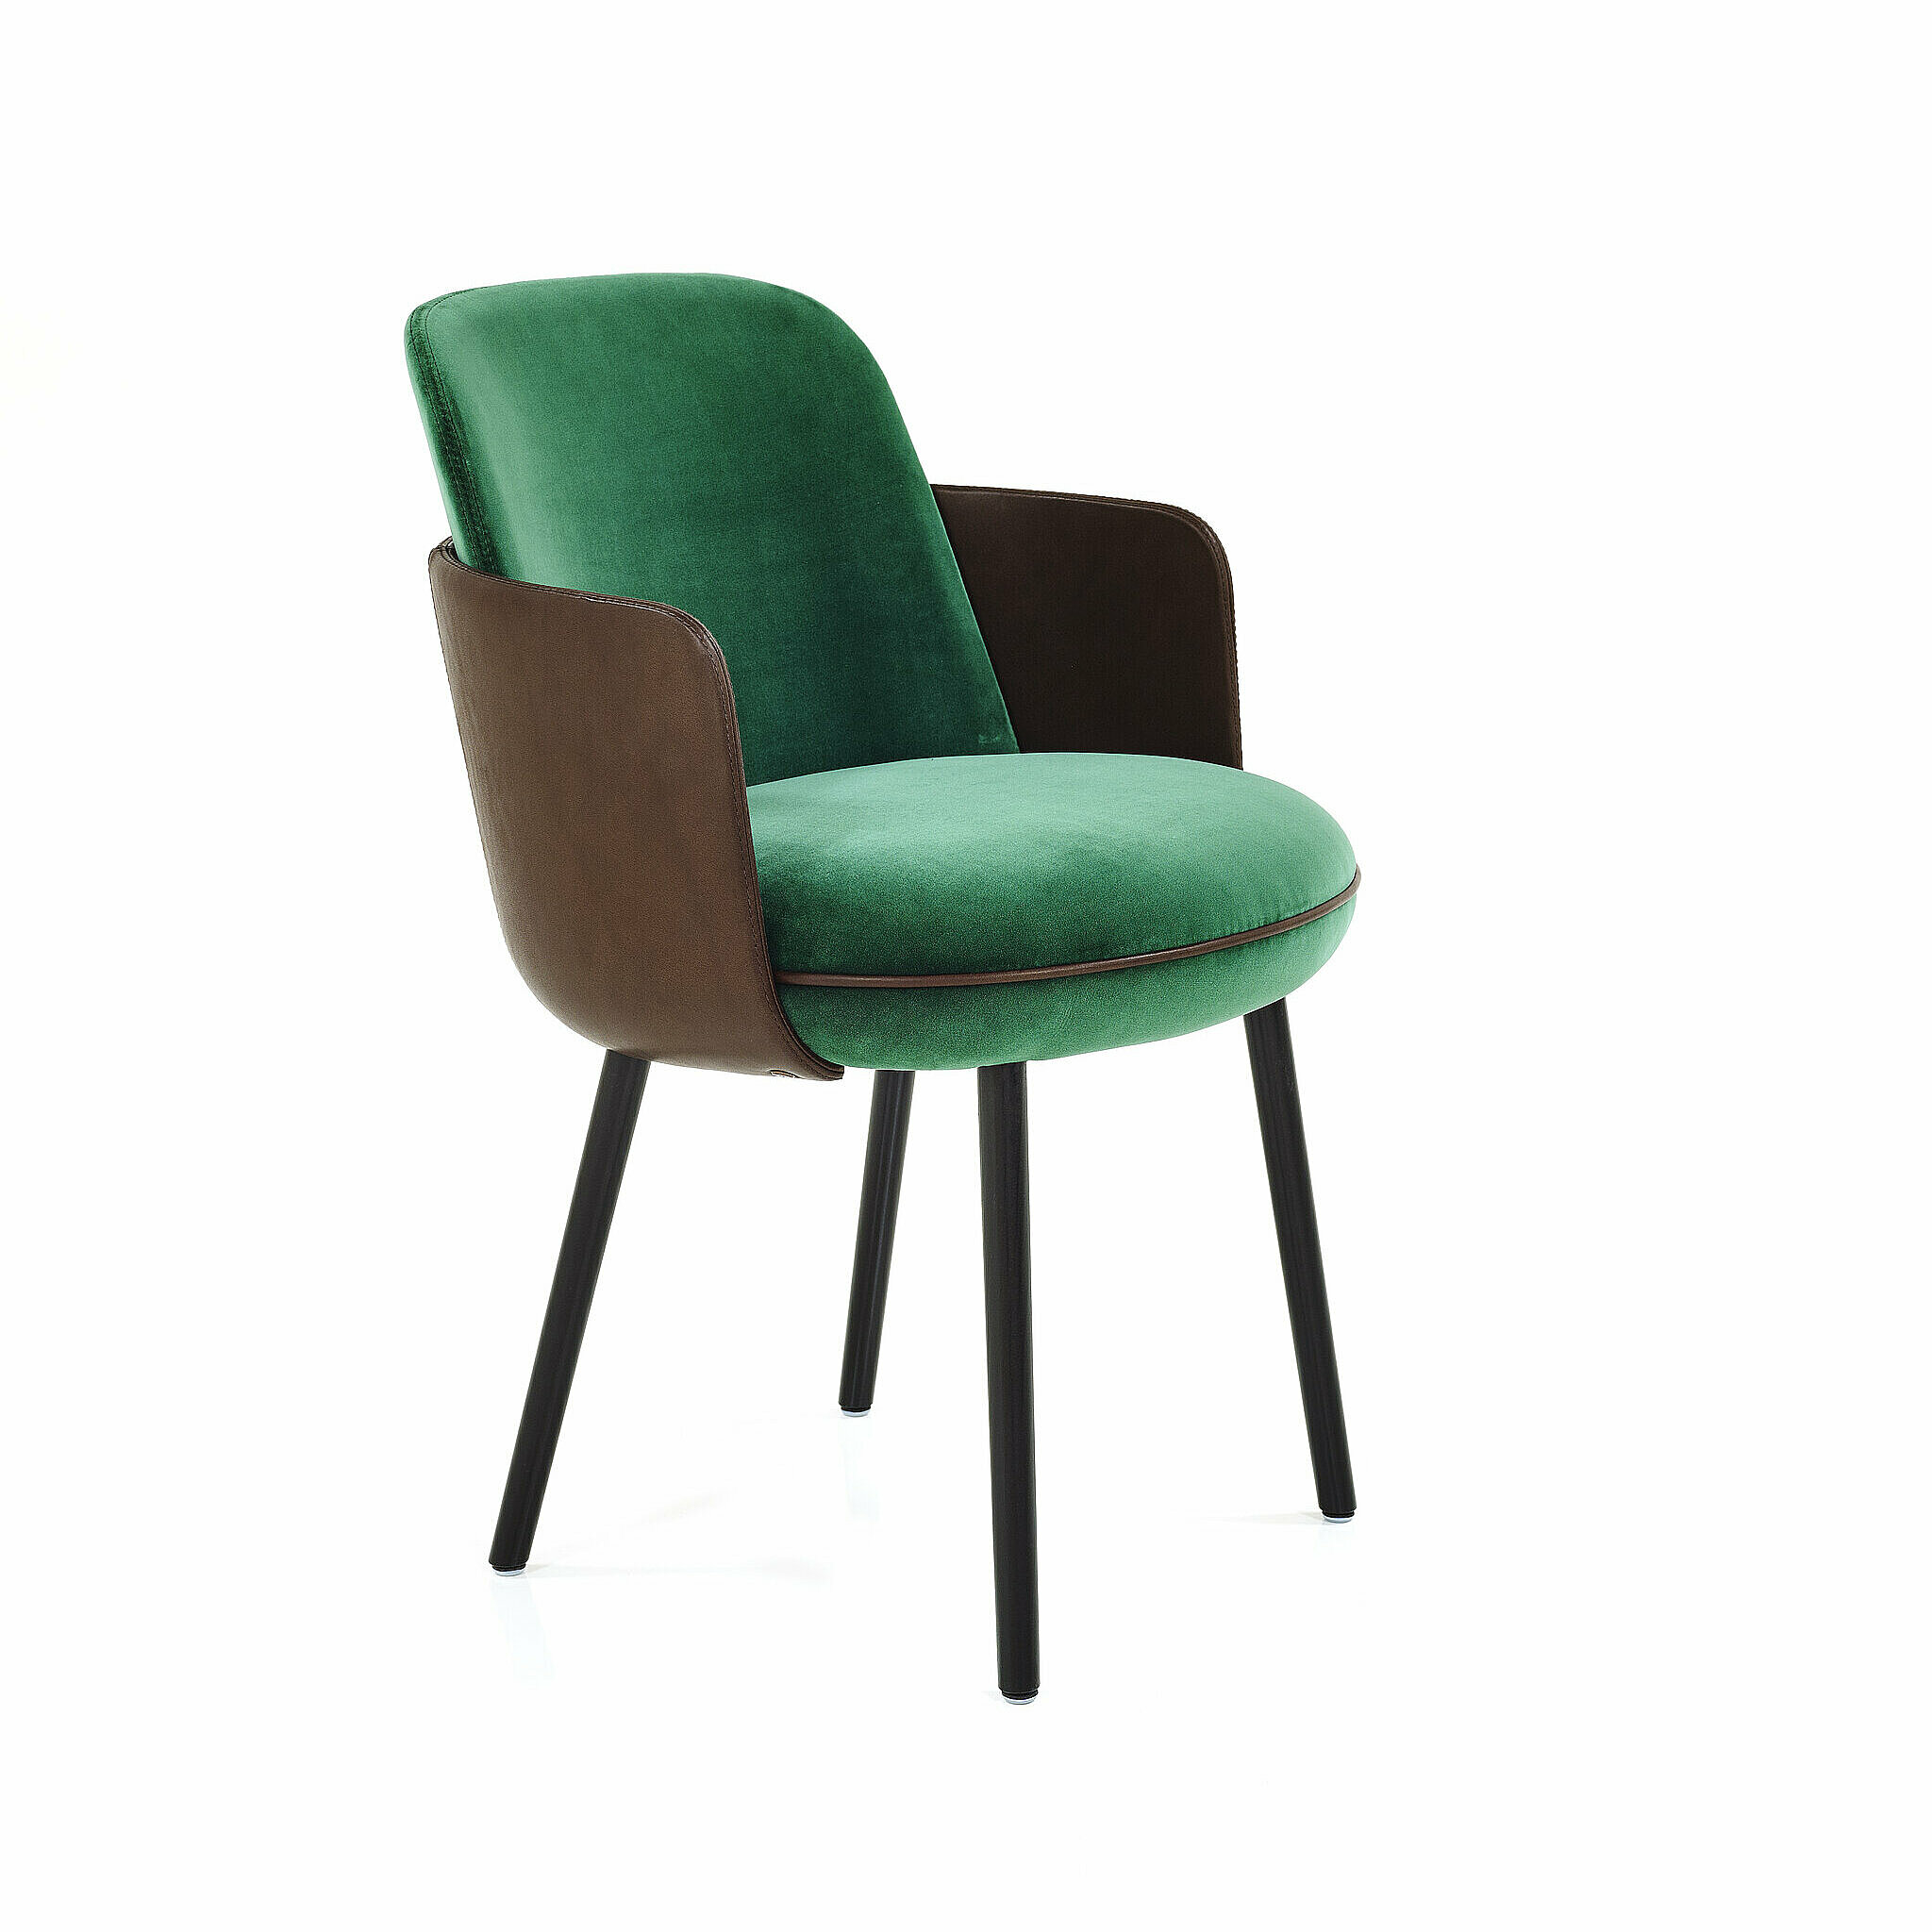 Merwyn Chair with green velvet